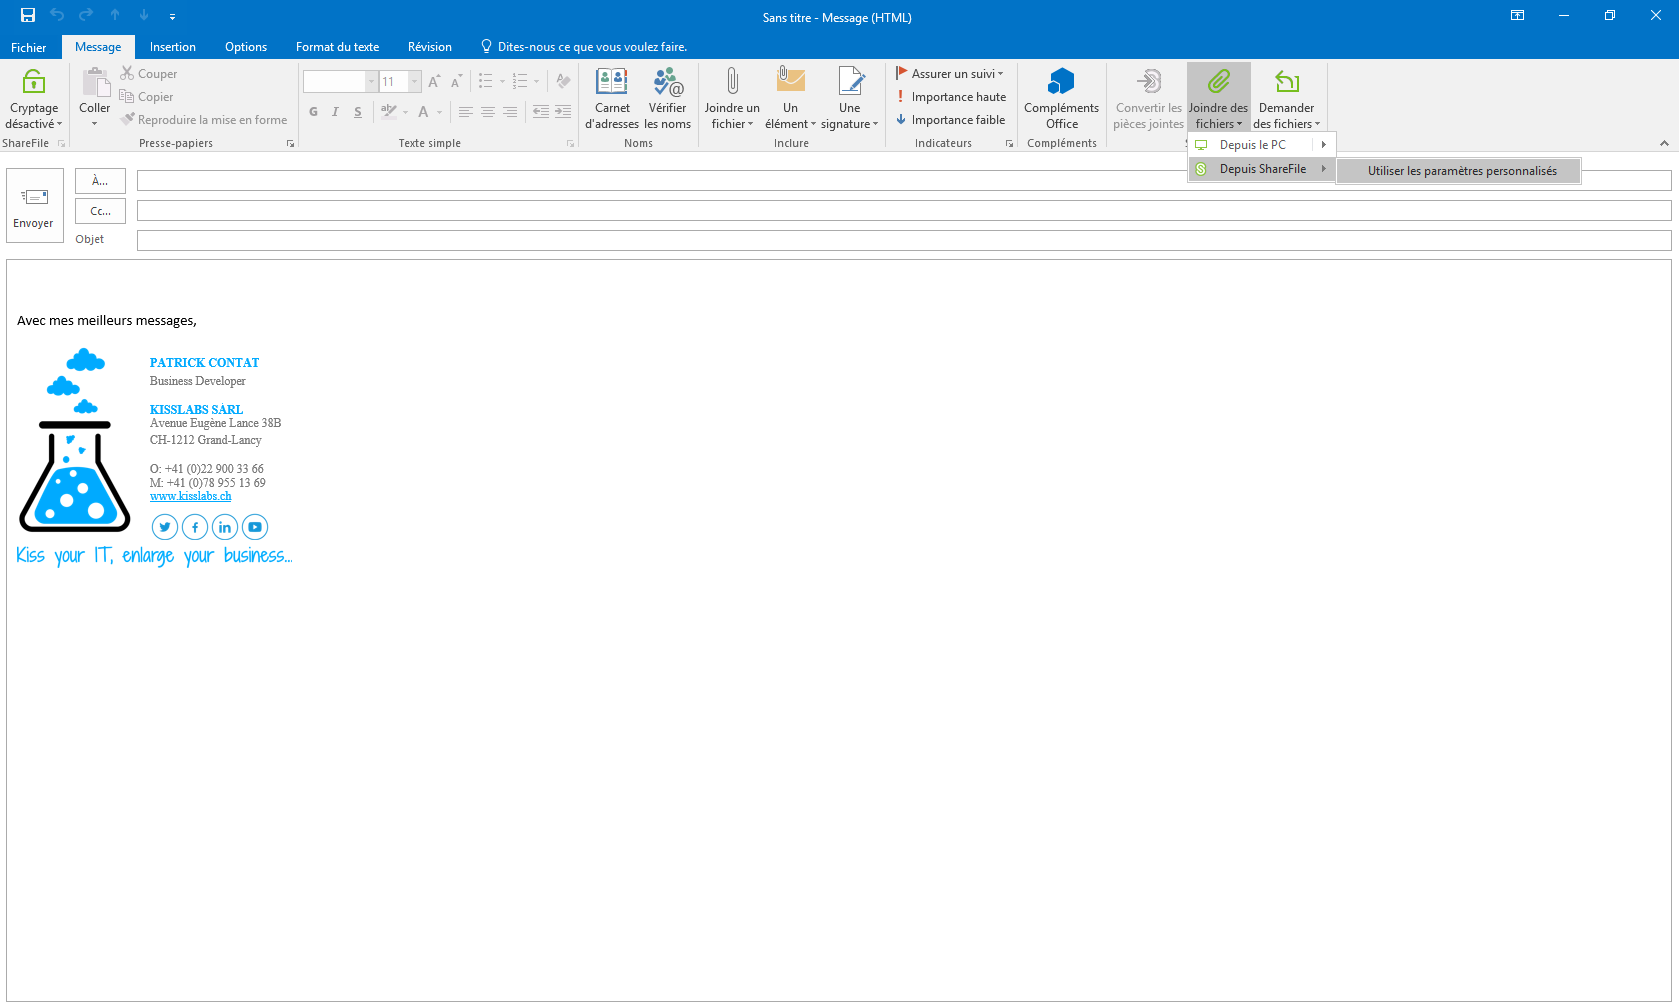 KissFile - Citrix ShareFile - Share File via Outlook